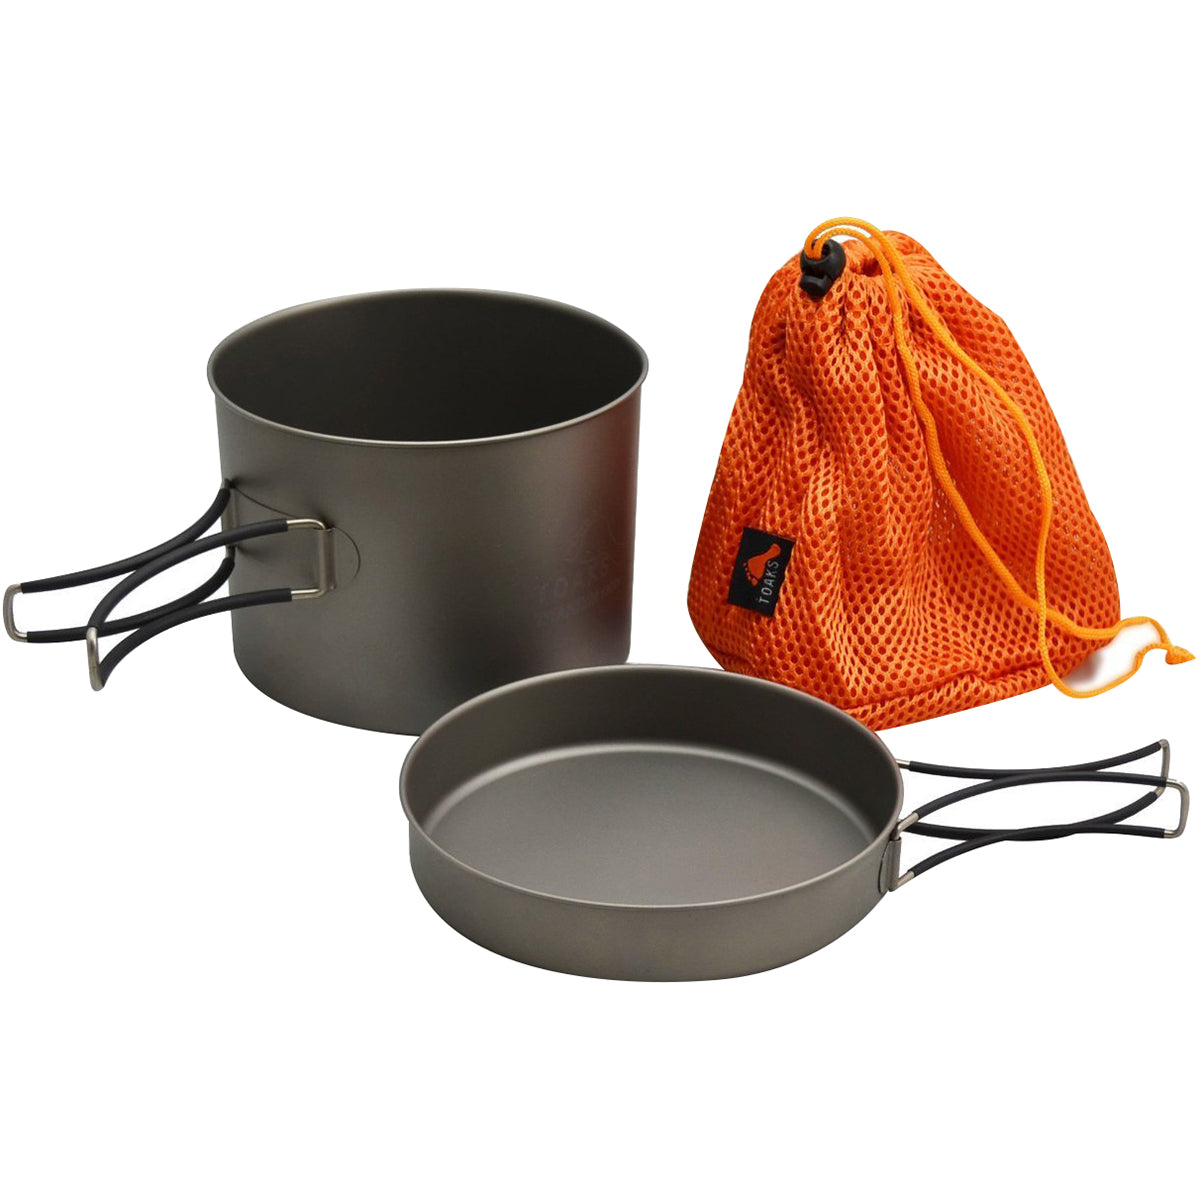 TOAKS Titanium Outdoor Camping Cook Pot with Pan and Foldable Handles - 1100ml TOAKS